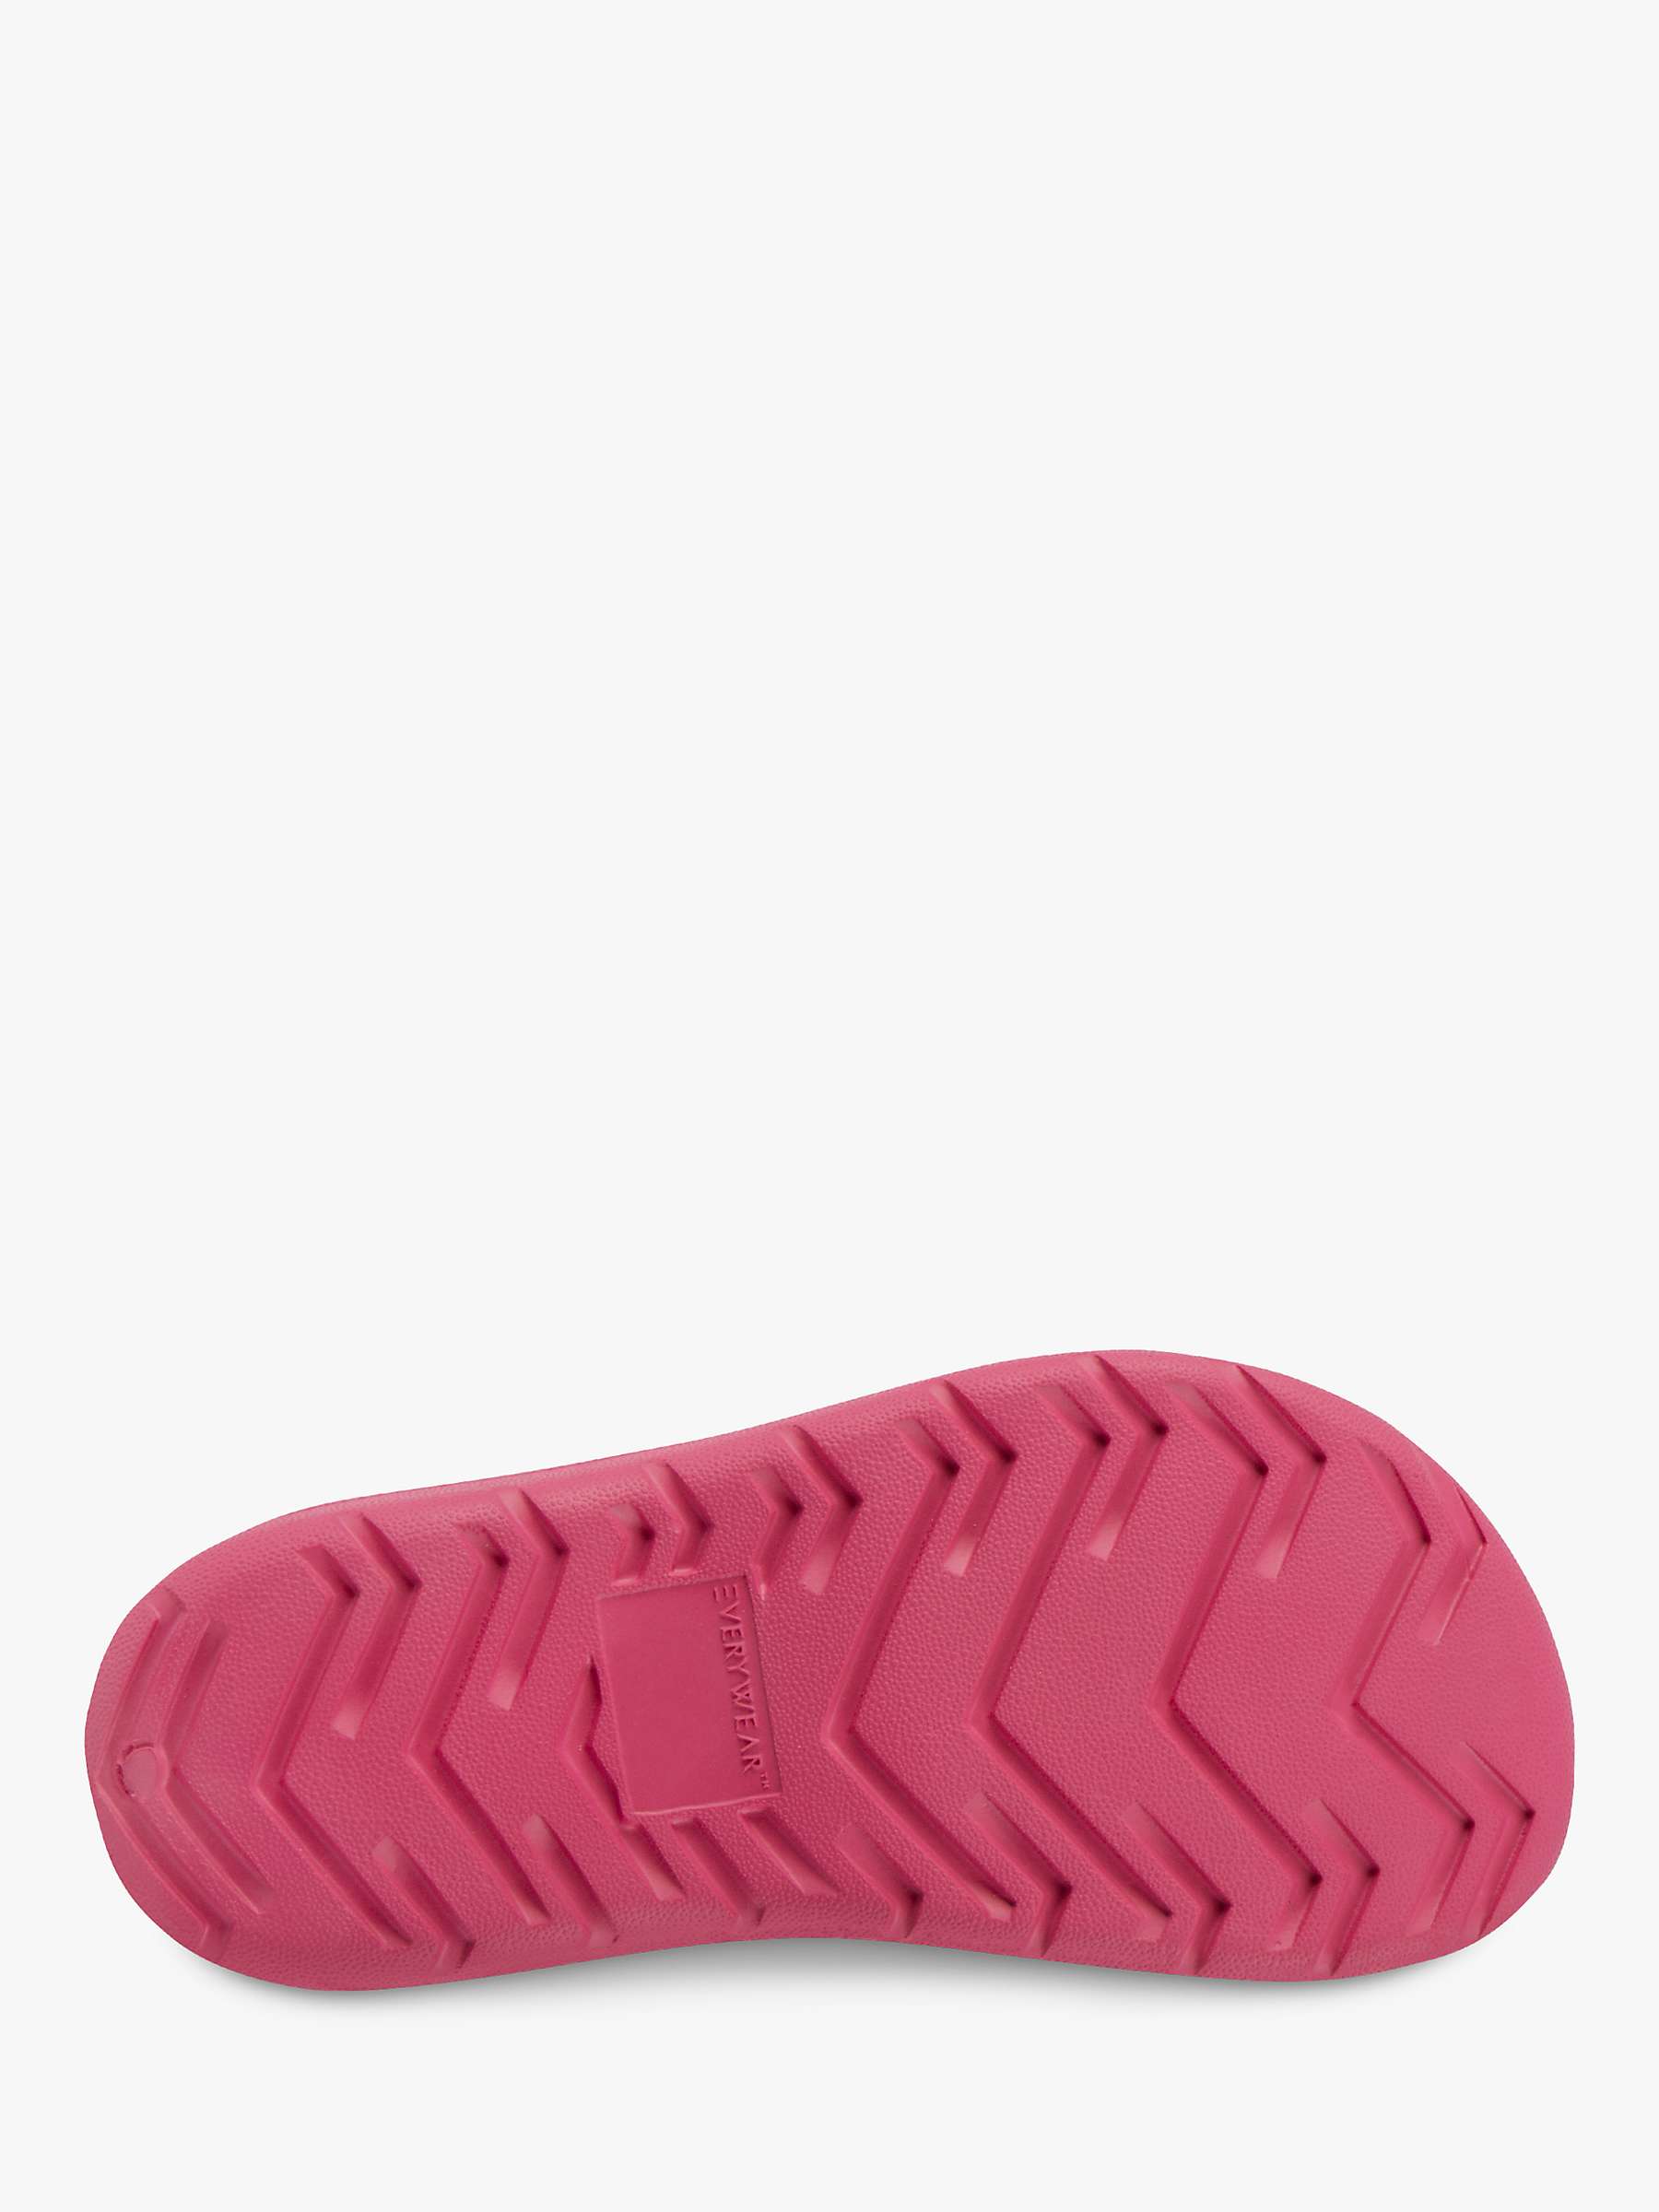 Buy totes Kids' Solbounce Sandals, Azalea Pink Online at johnlewis.com